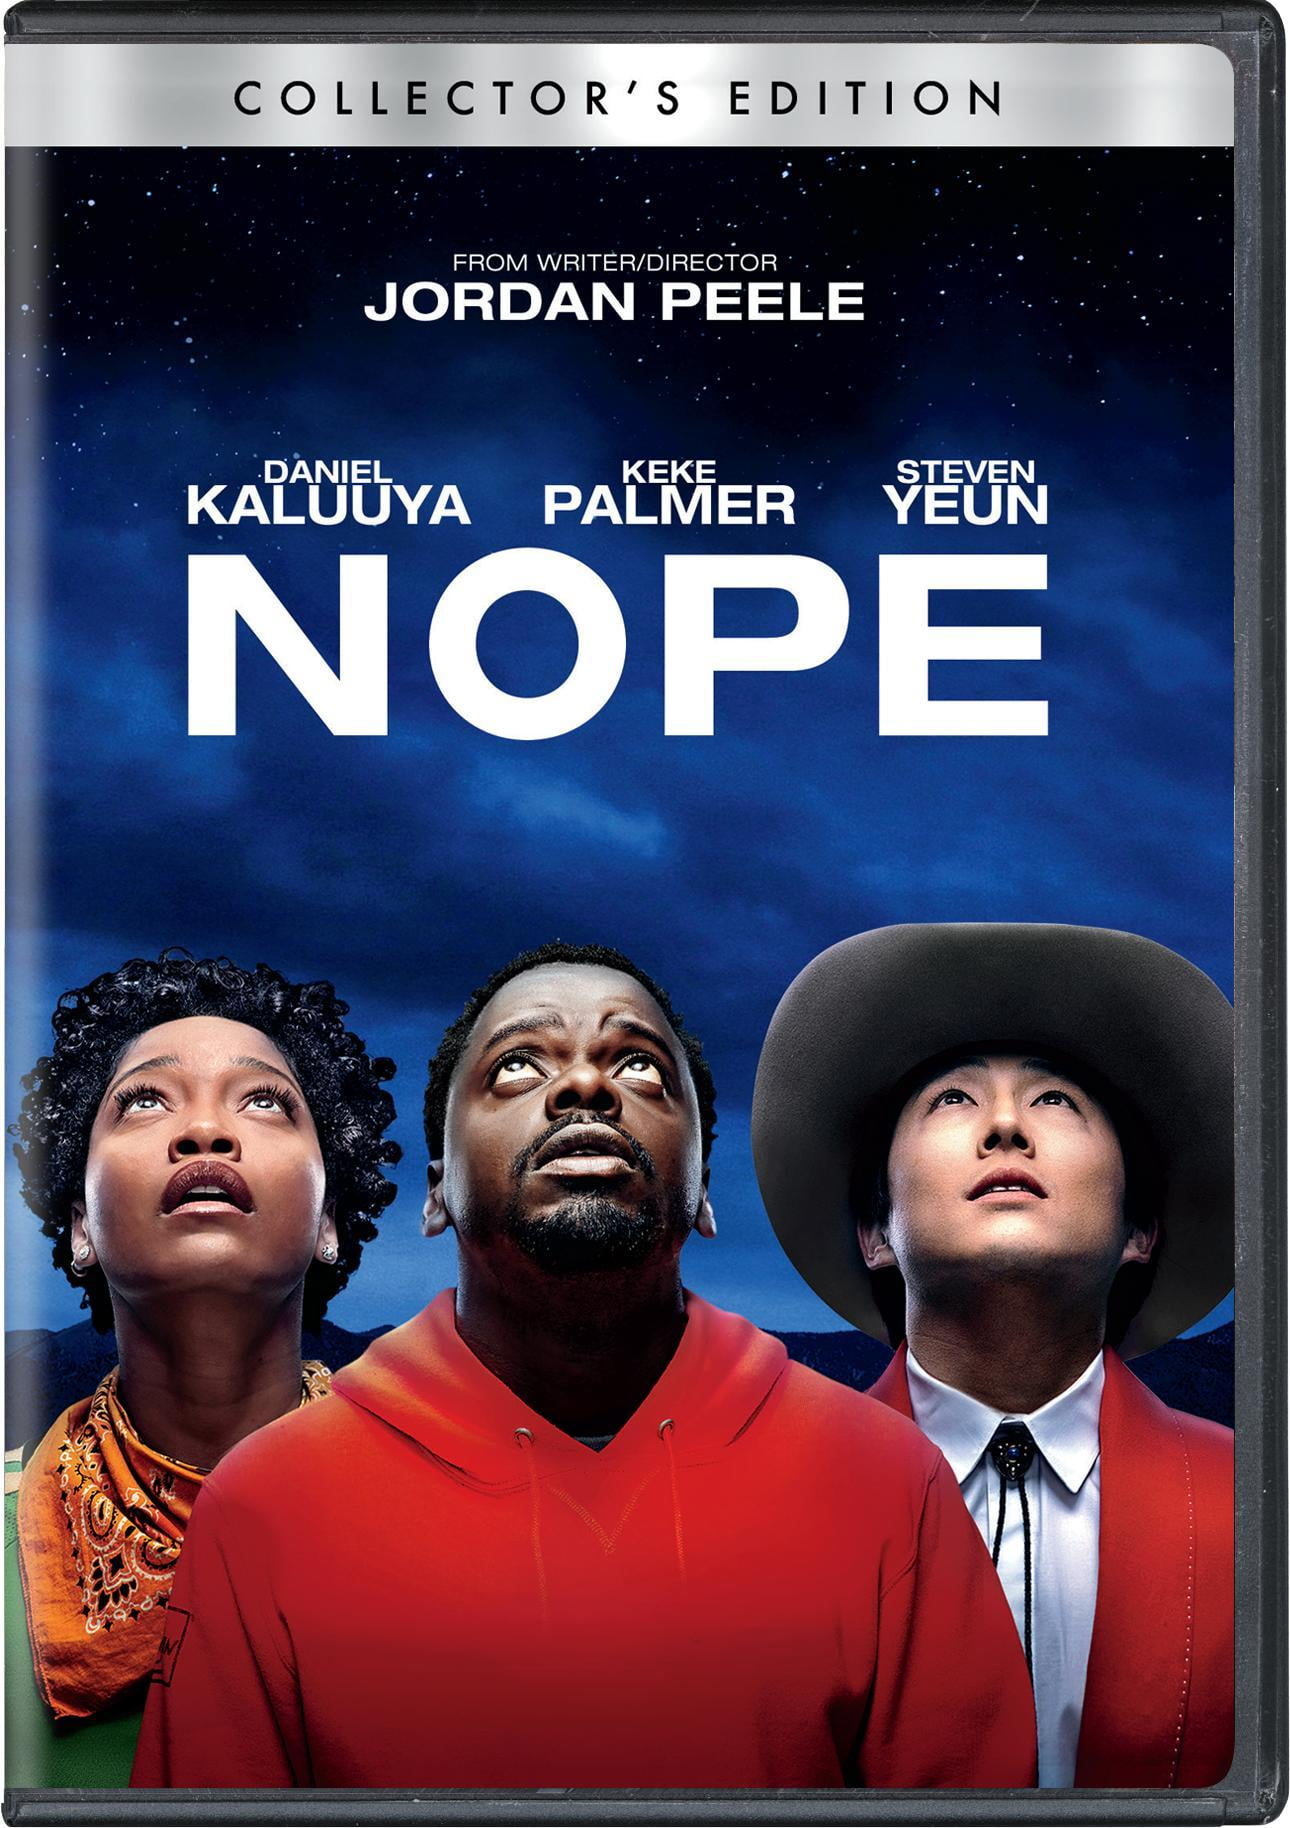 Universal Studios Nope (2022) (DVD) from Jordan Peele